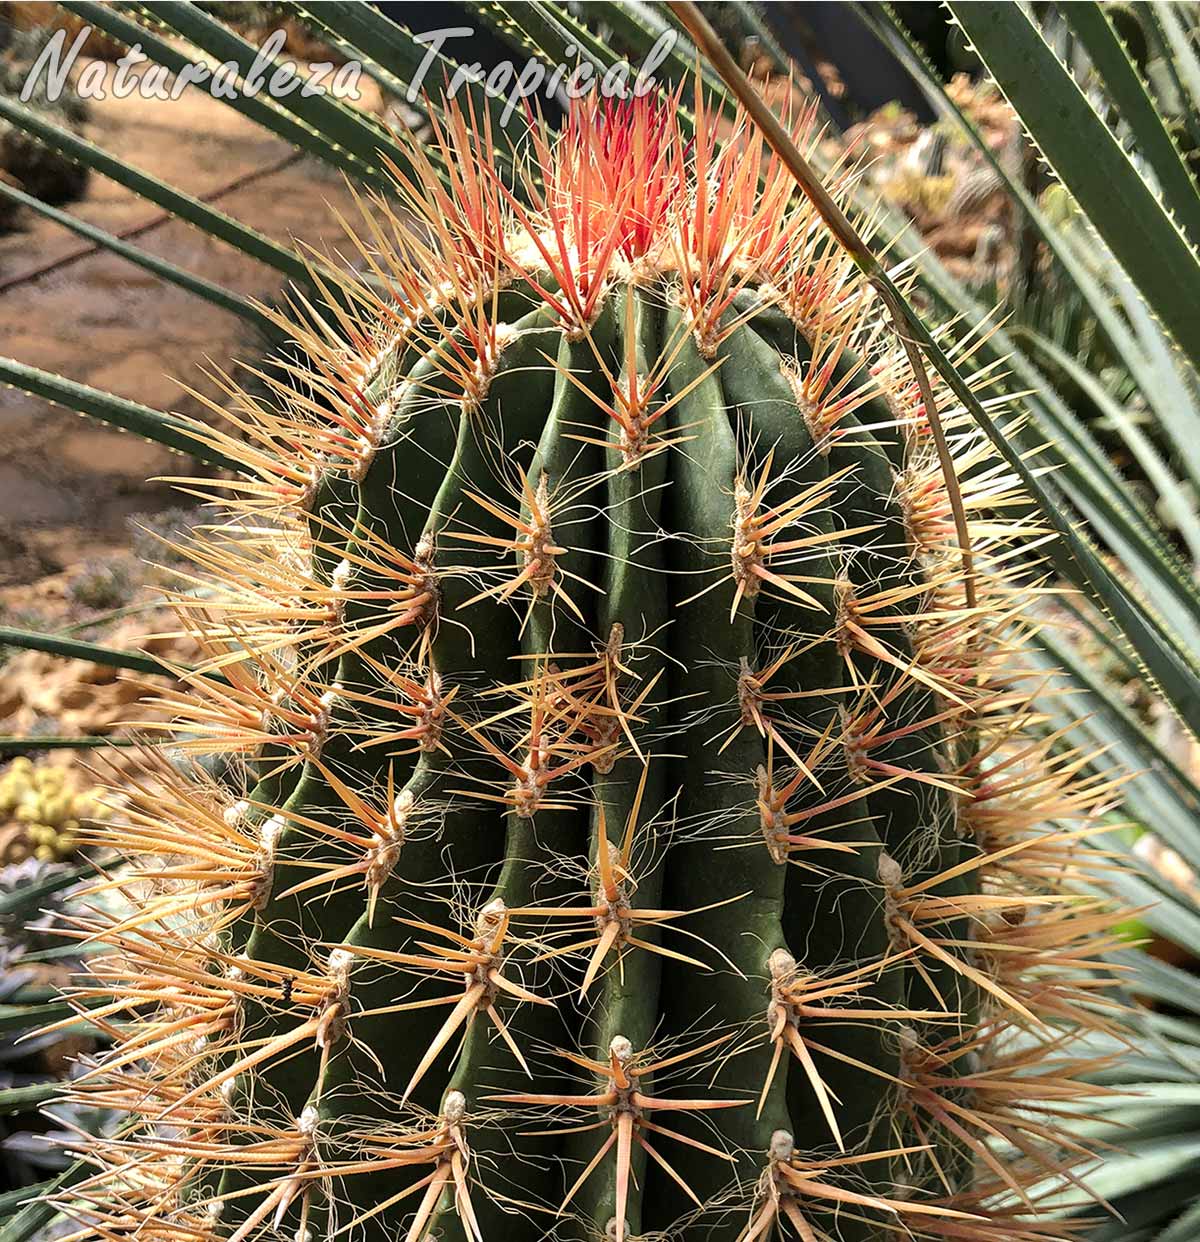 Vista del tallo característico del cactus biznaga roja, Ferocactus pilosus